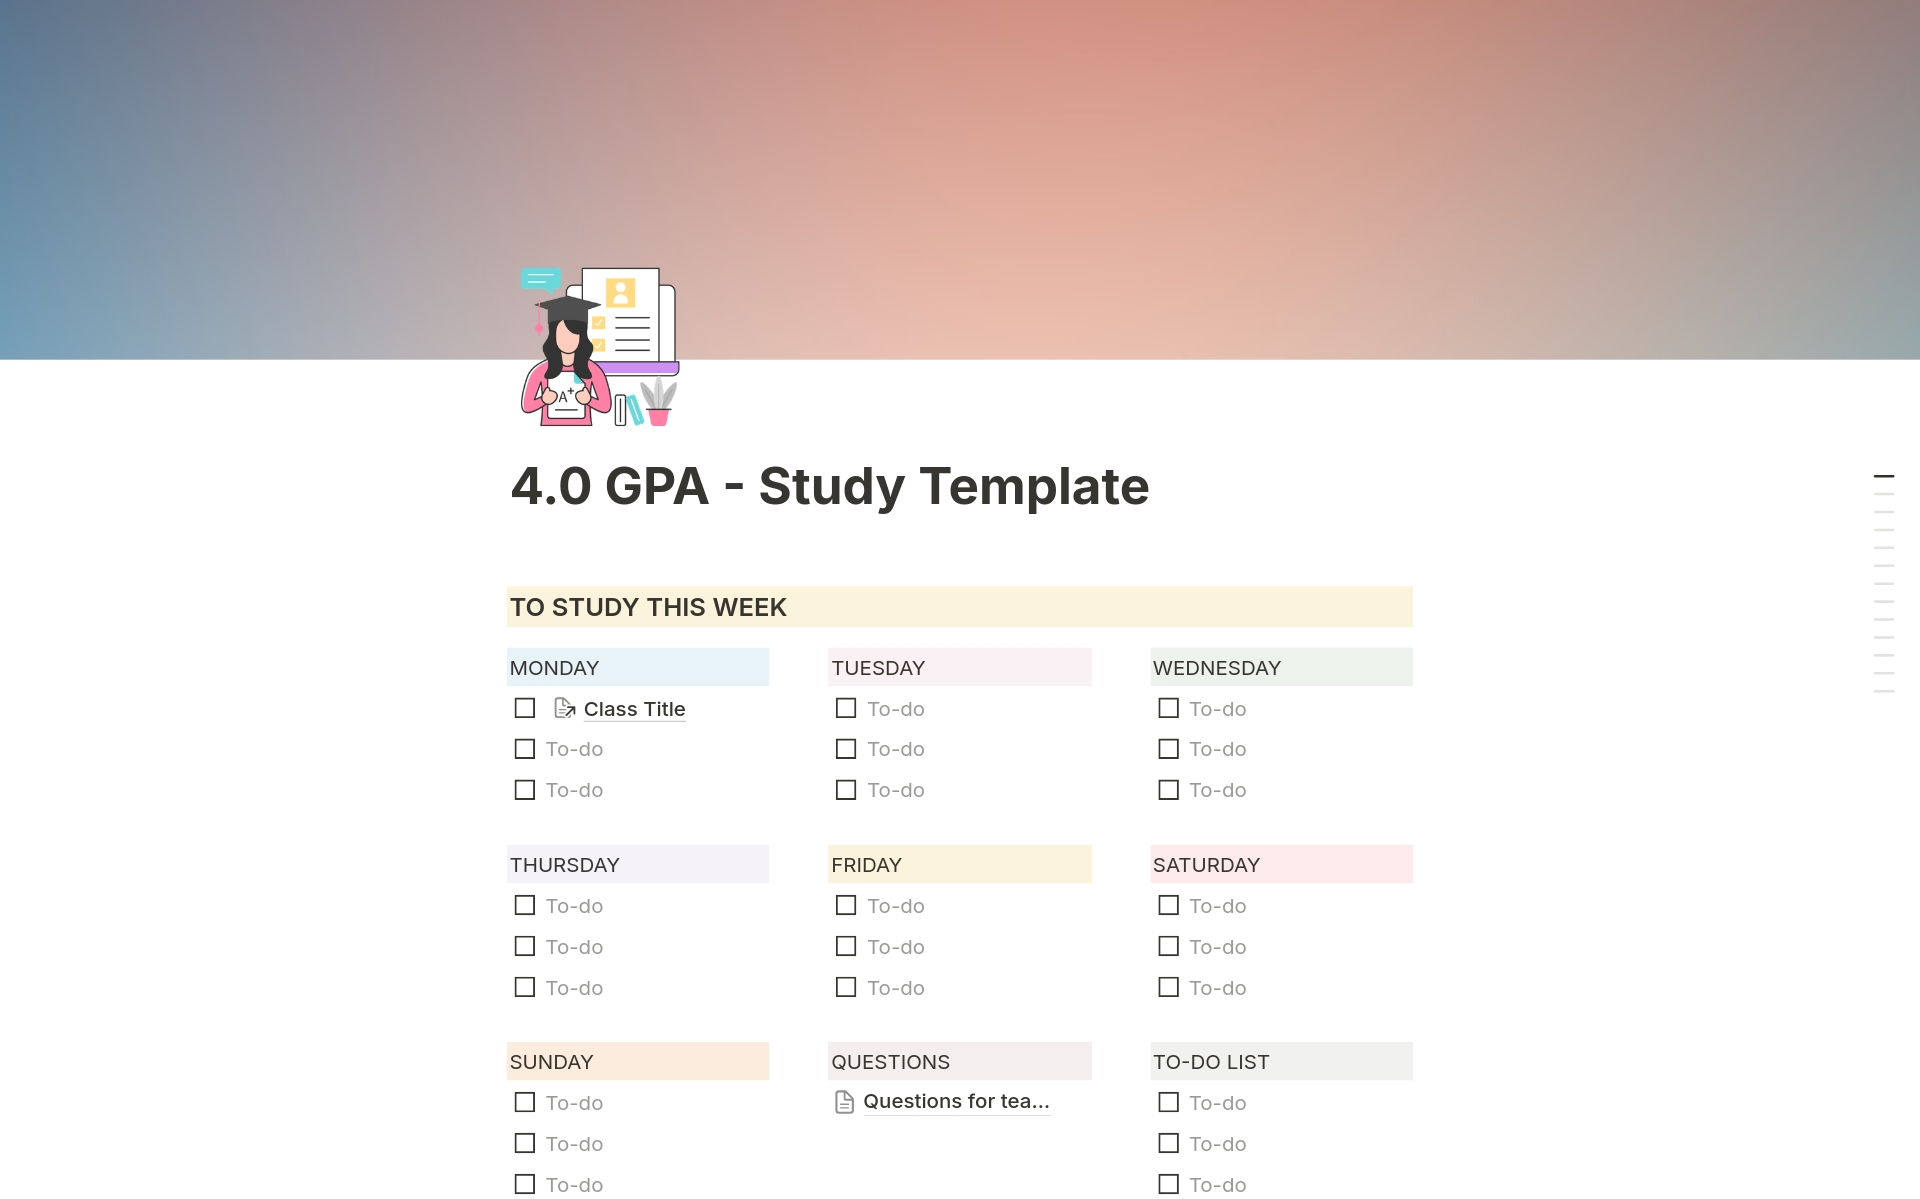 Vista previa de plantilla para 4.0 GPA - Study System